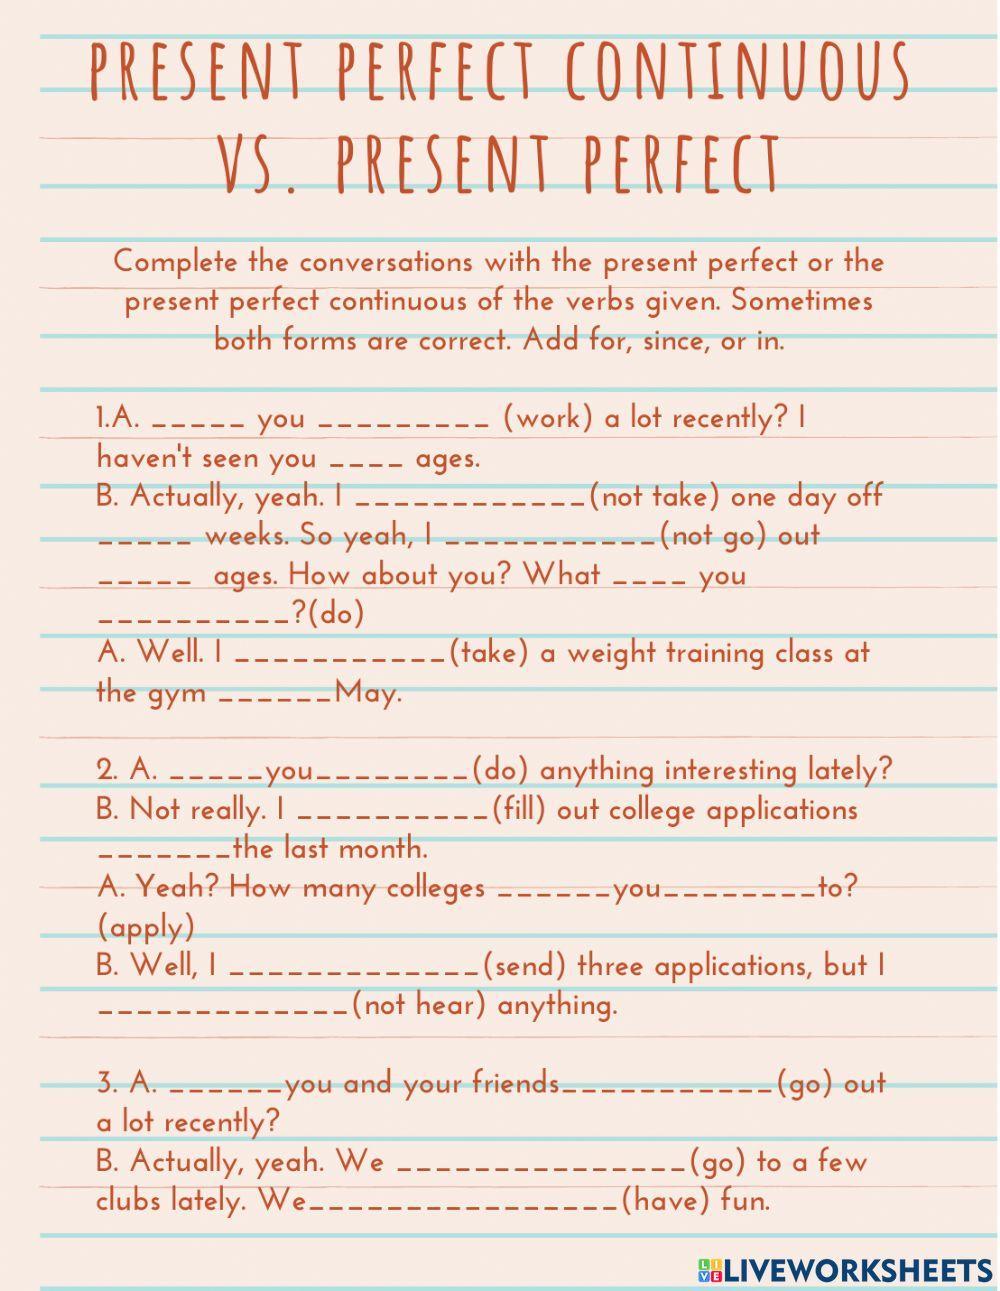 Present perfect vs present perfect continuous